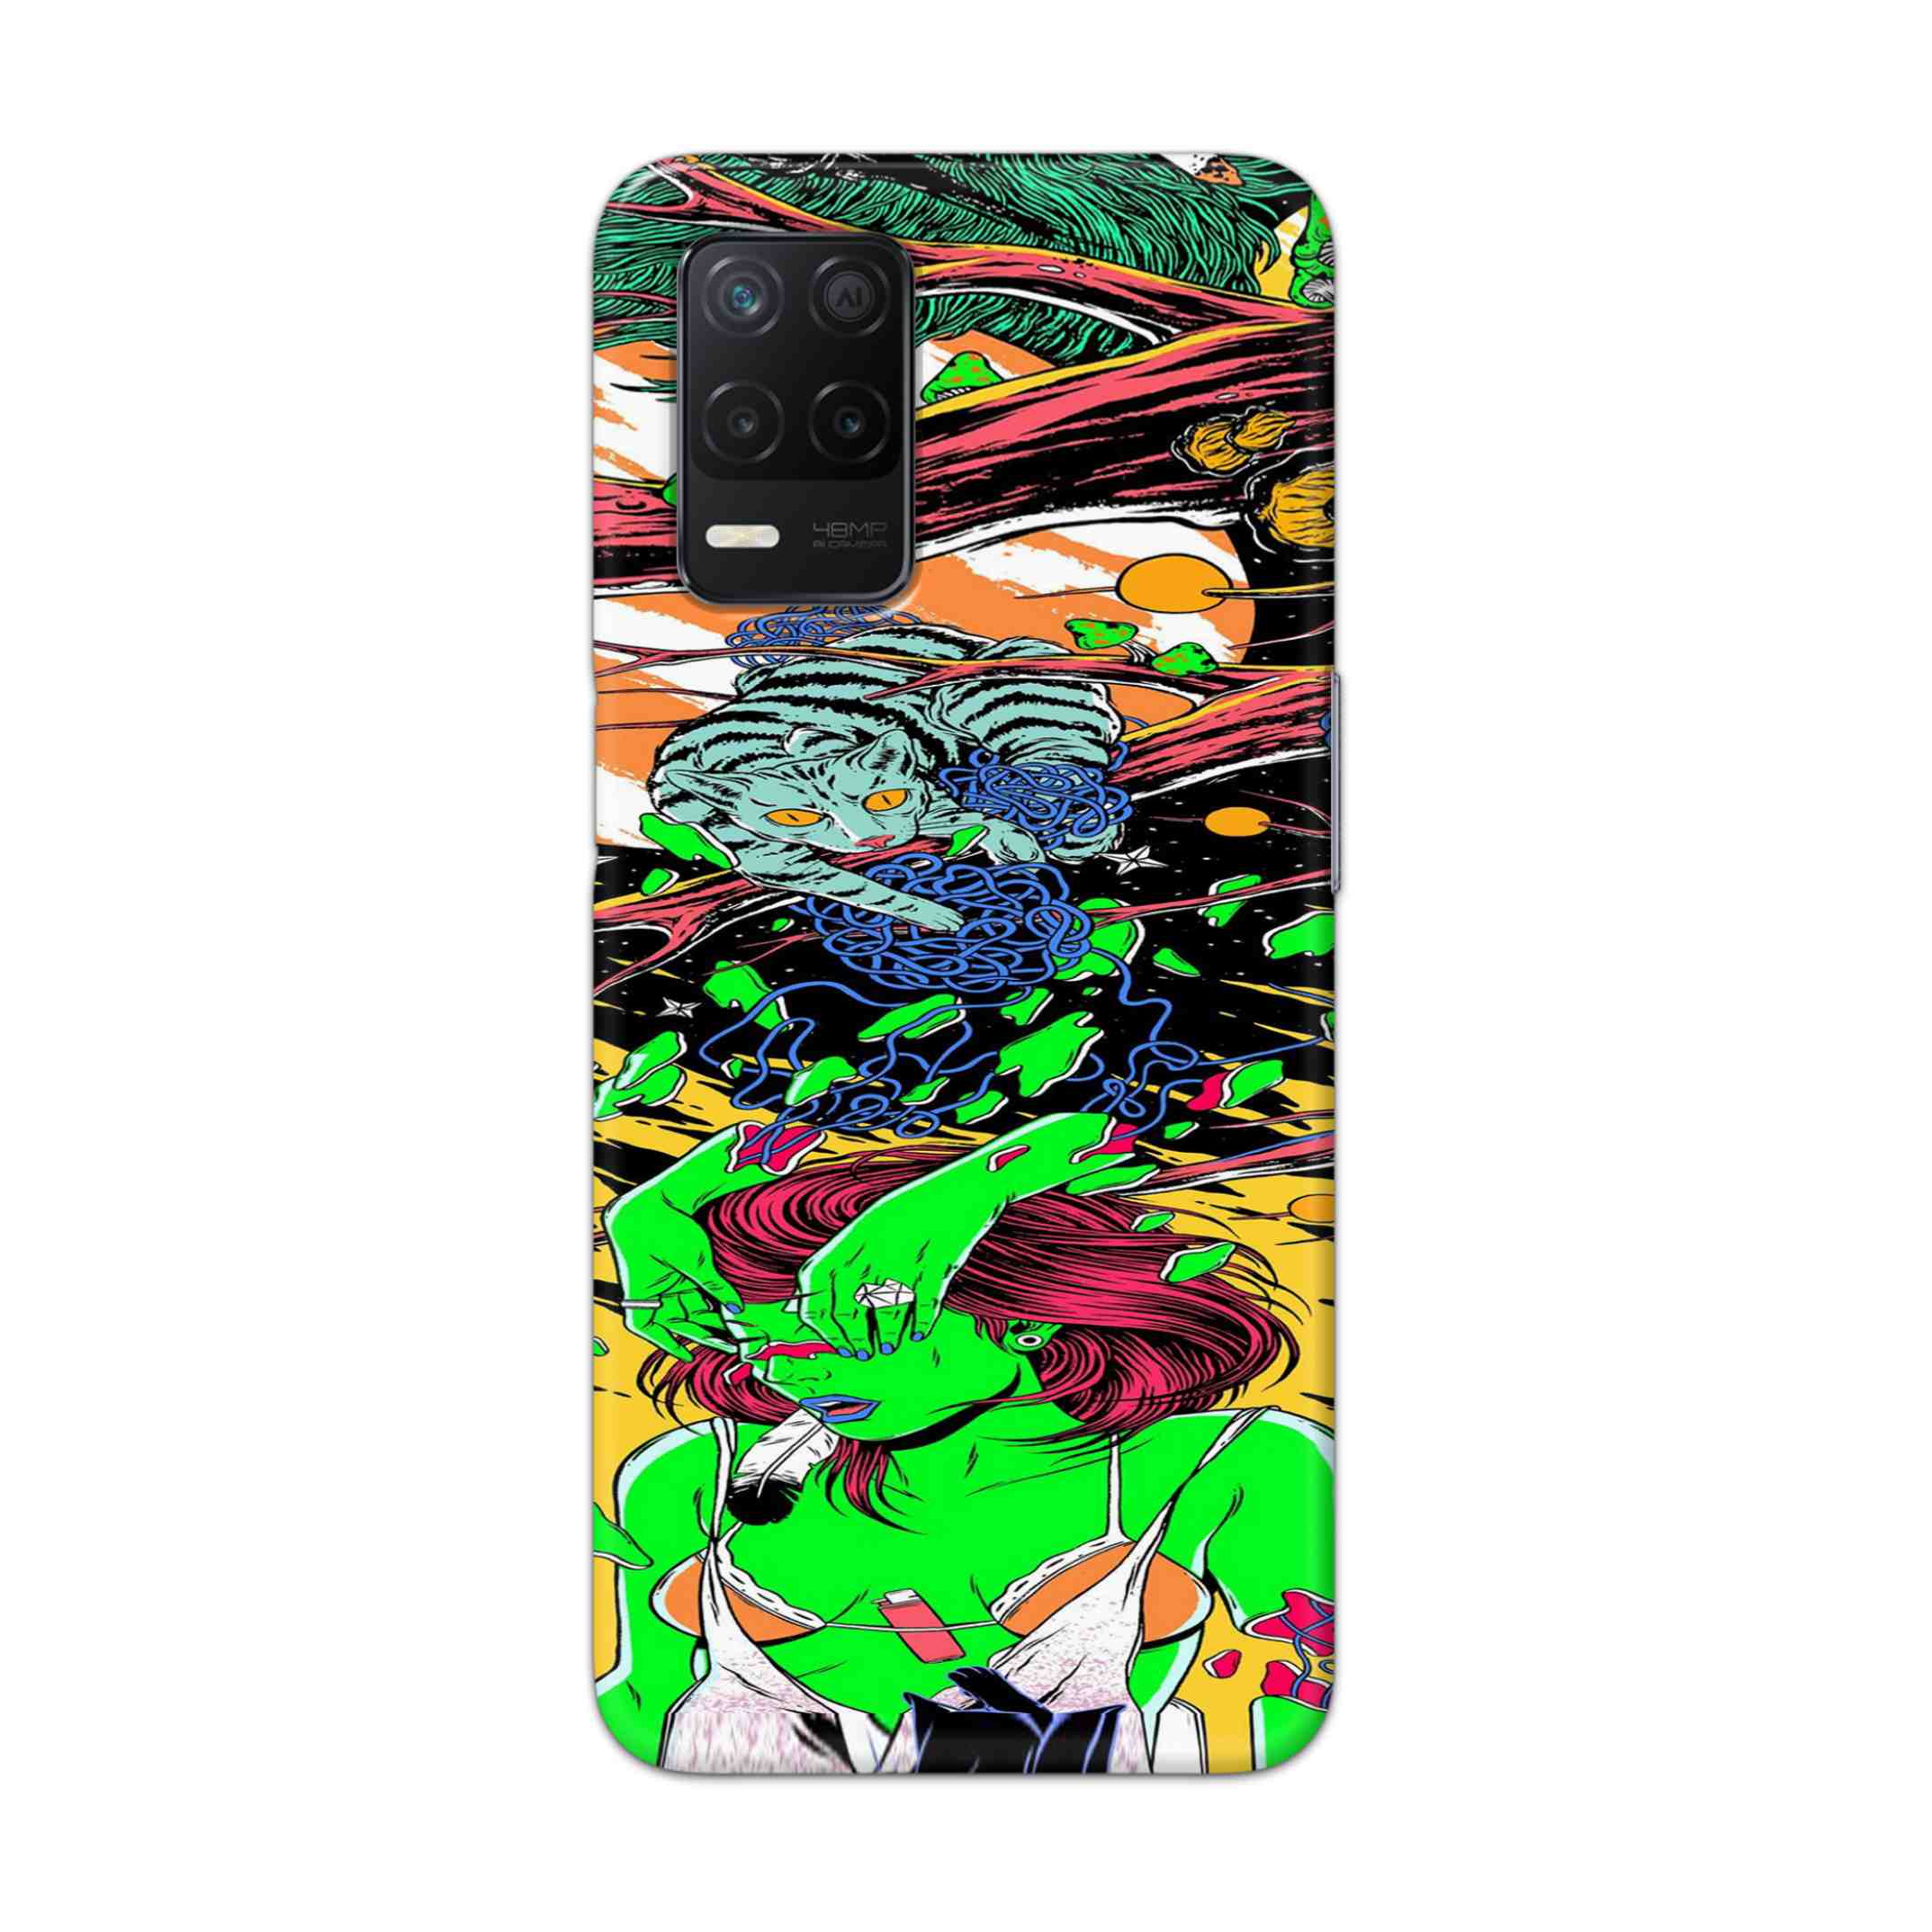 Buy Green Girl Art Hard Back Mobile Phone Case Cover For Realme Narzo 30 5G Online